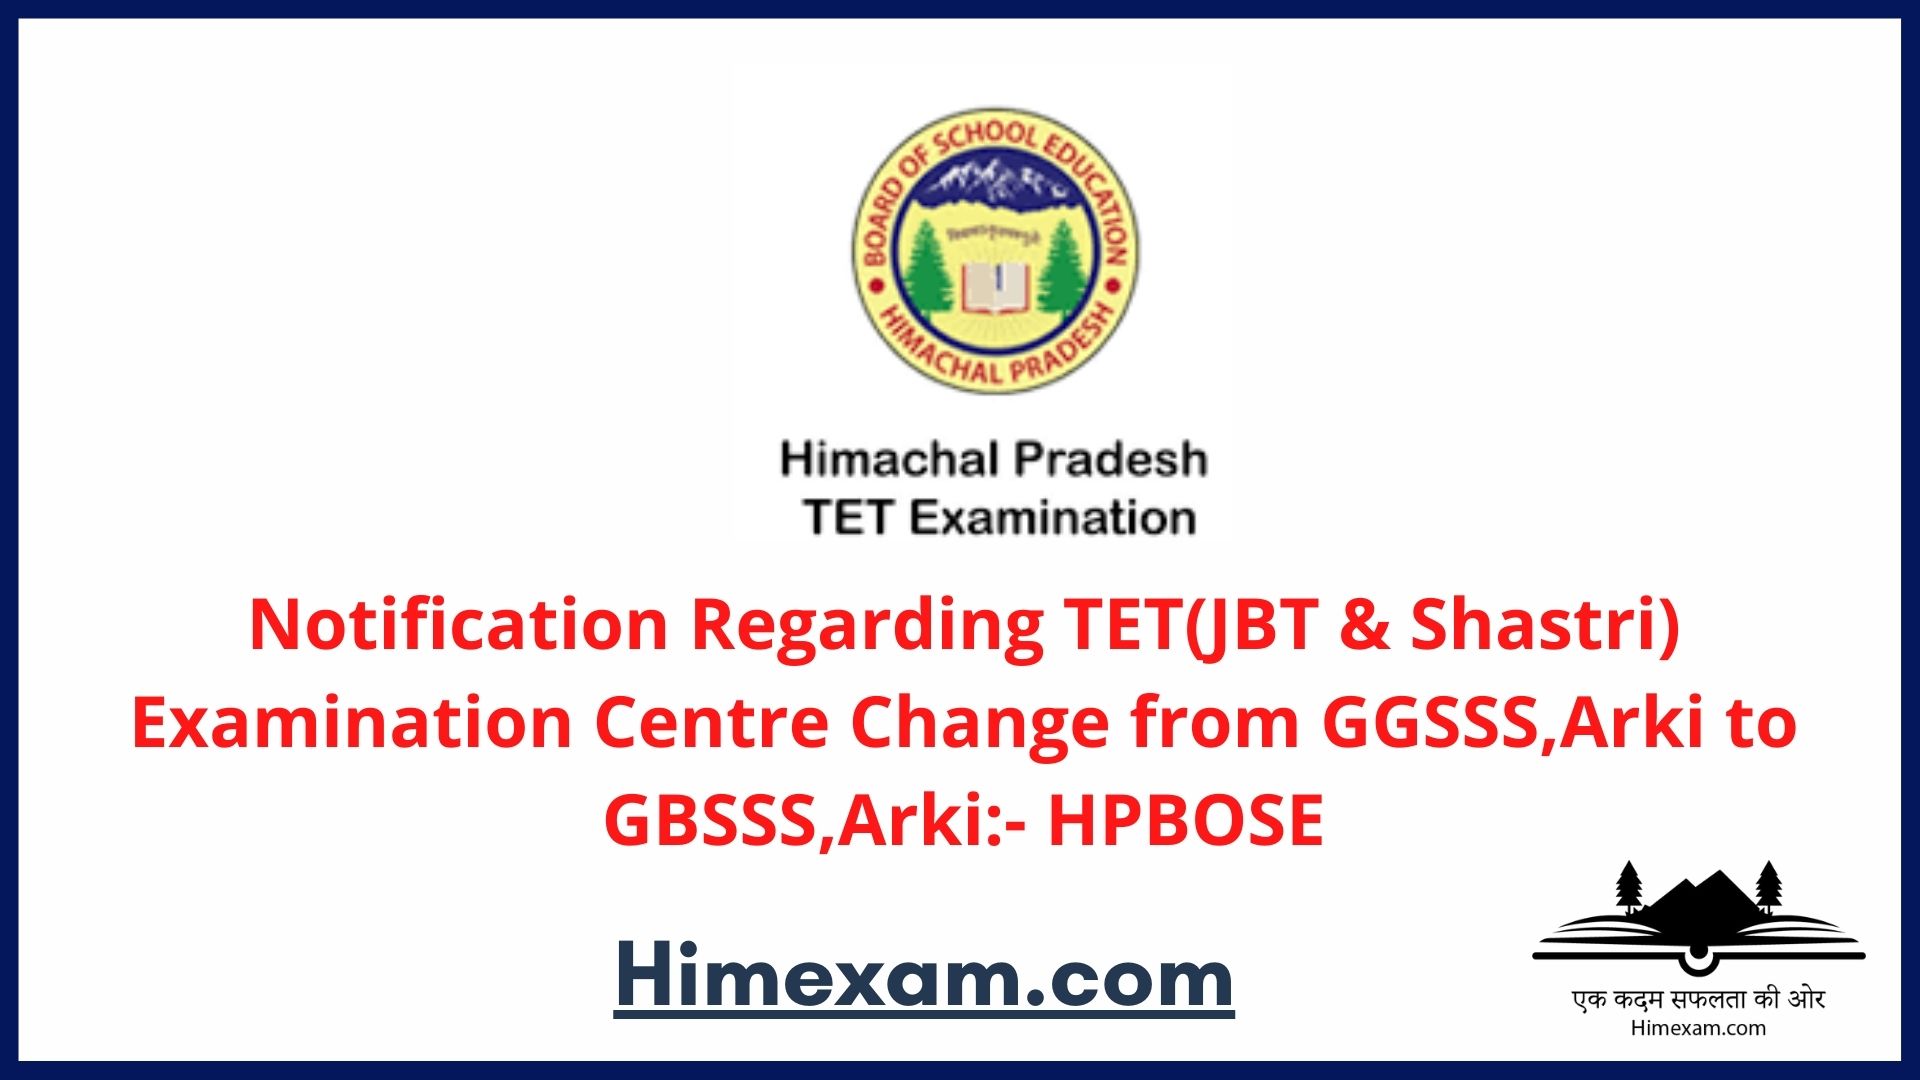 Notification Regarding TET(JBT & Shastri) Examination Centre Change from GGSSS,Arki to GBSSS,Arki:- HPBOSE